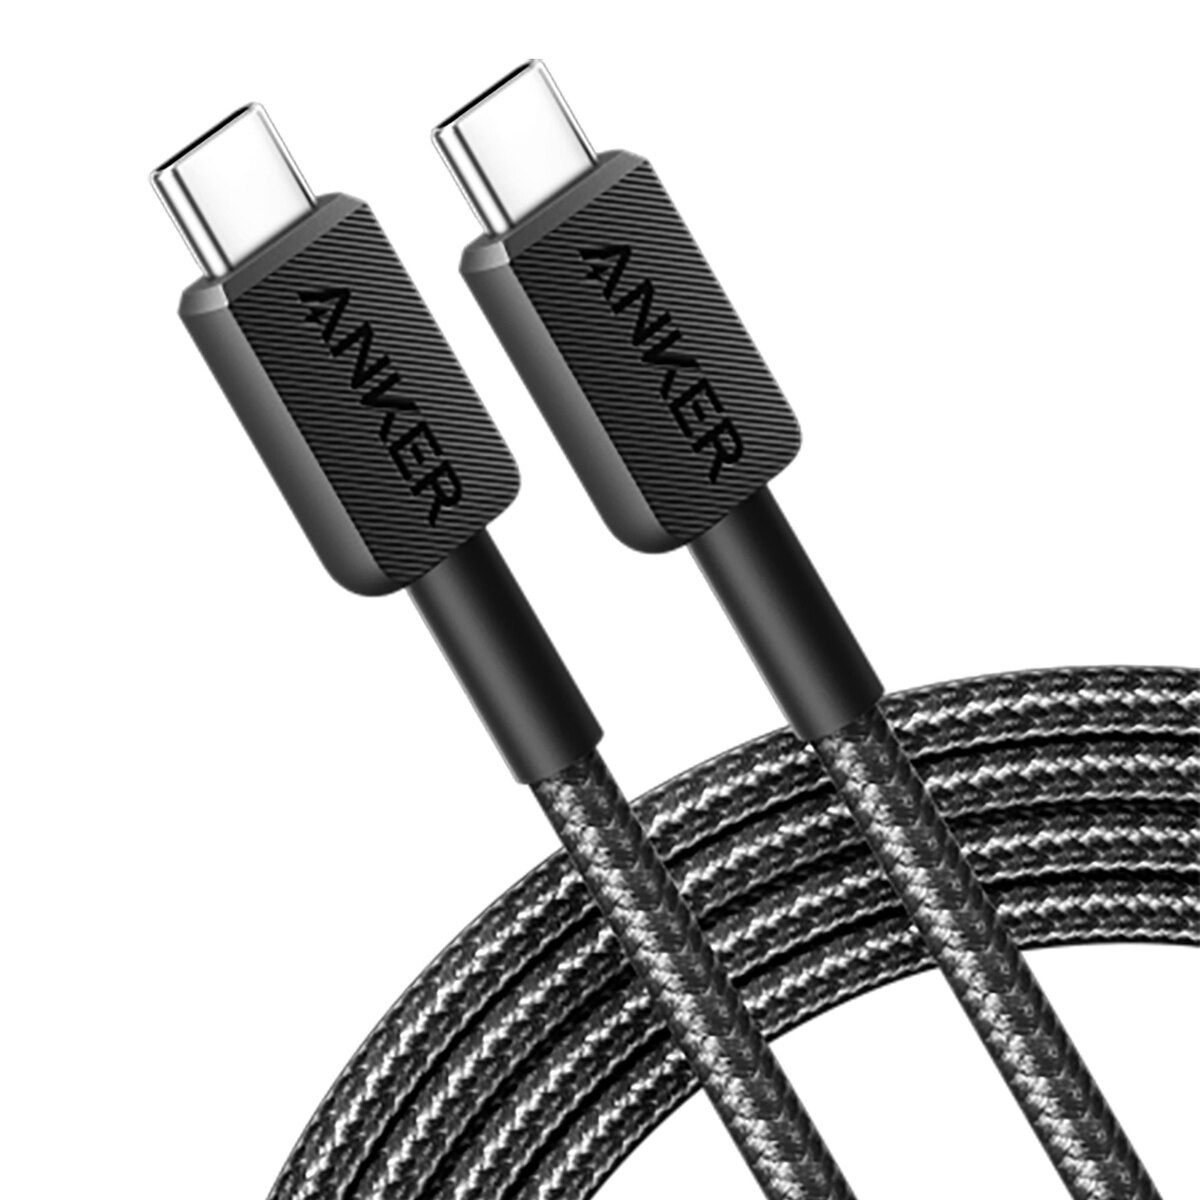 Anker 322 USB-C to USB-C Cable (6ft, Nylon) A81F6H11 Black